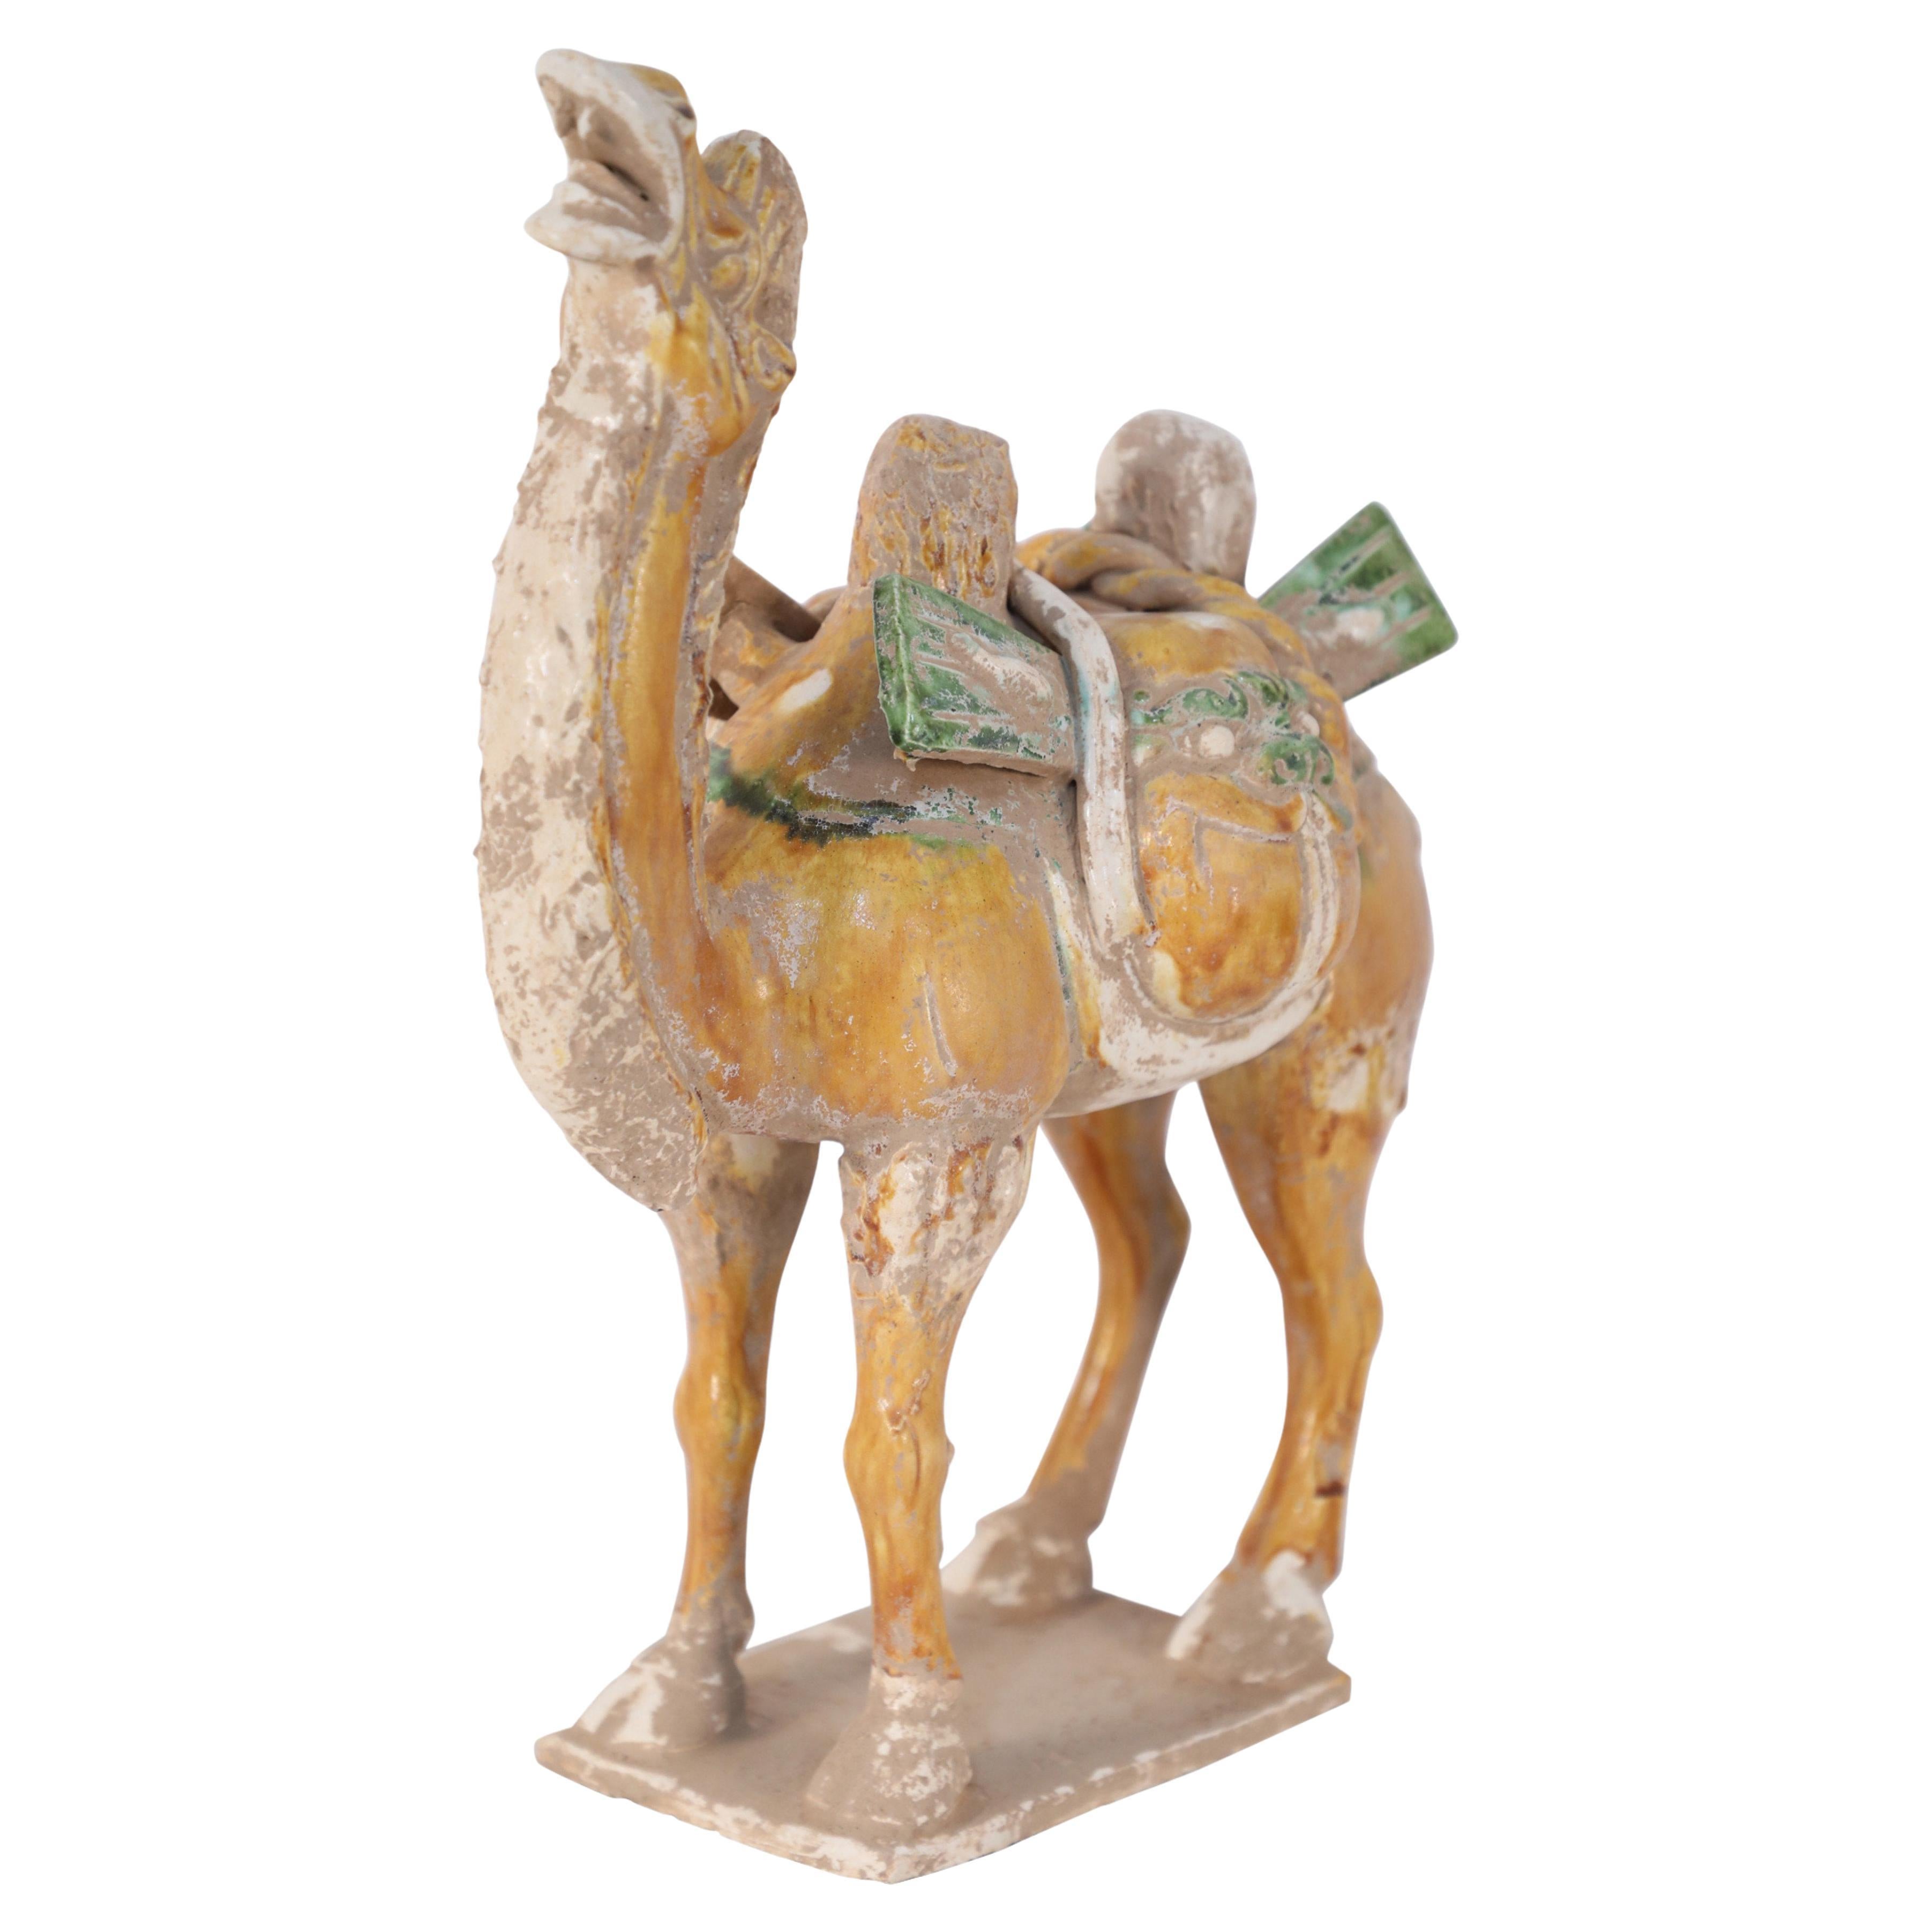 Figura de tumba de camello de terracota esmaltada de estilo chino de la Tang Dynasty Sancai